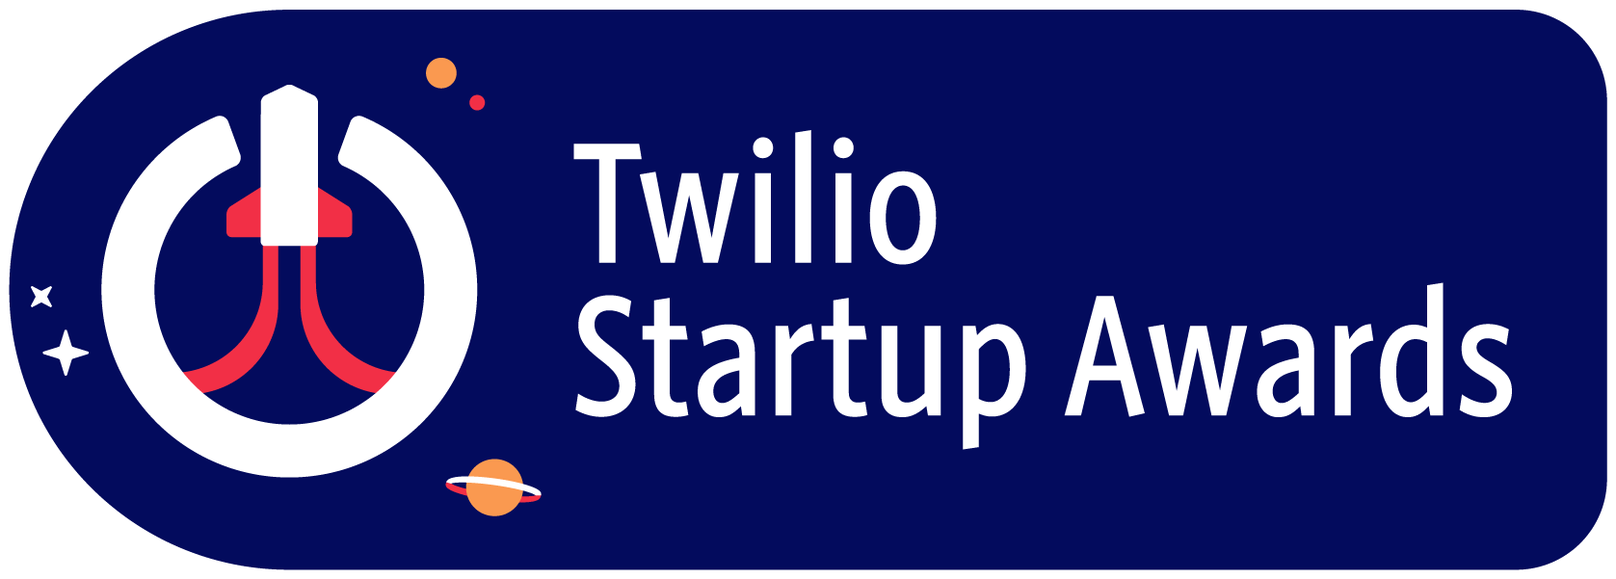 4c_finalist_twilio_startup_awards.width-1616